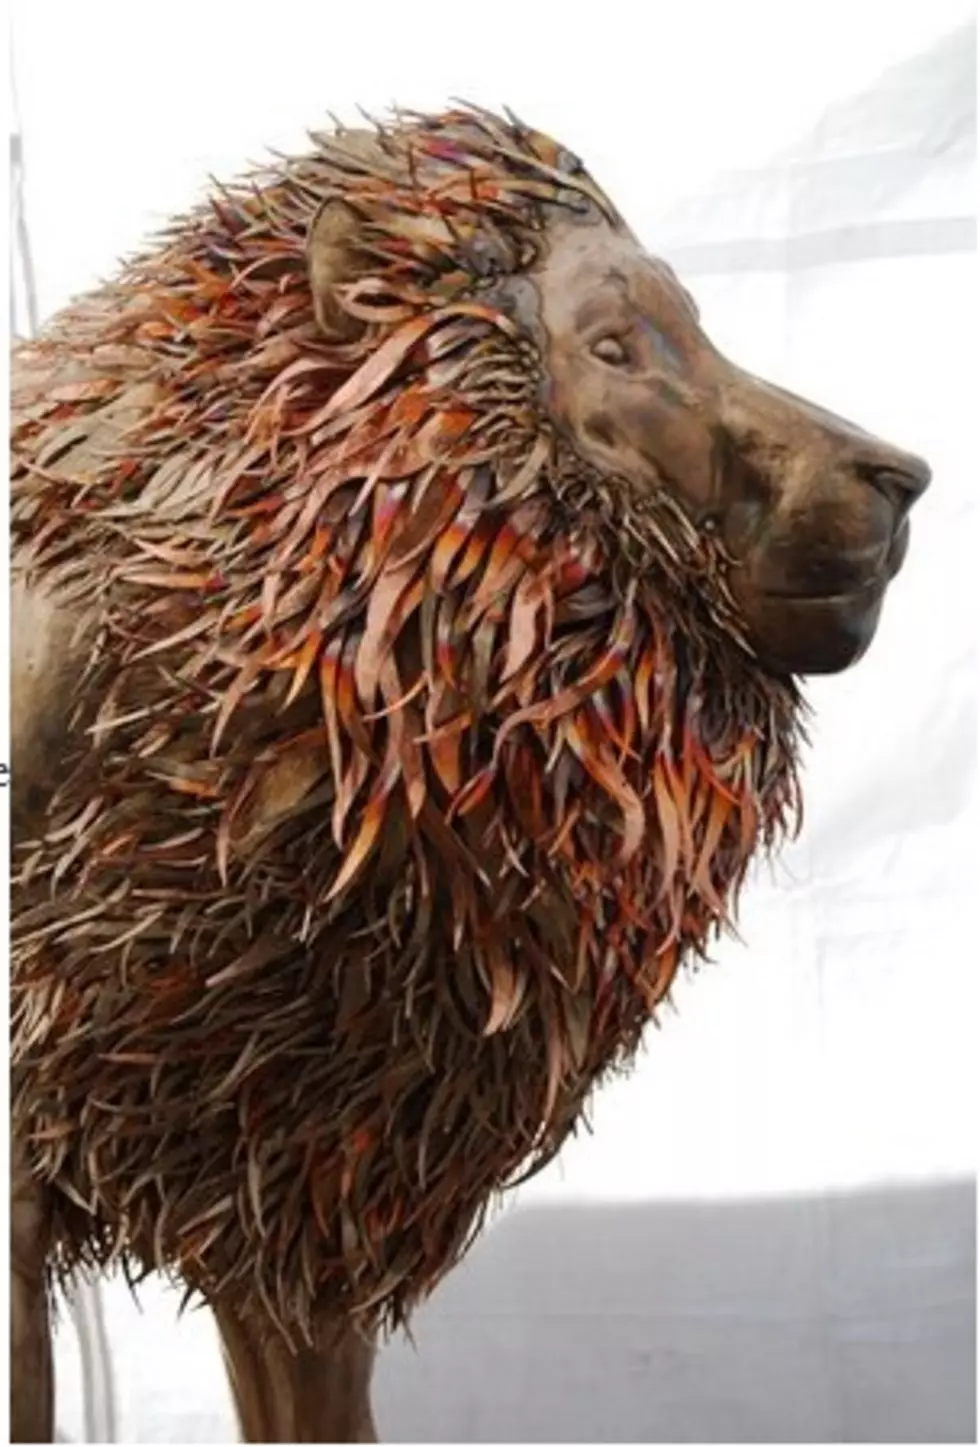 Gooding Lion Sculptor Wins Magic Valley Art Contest